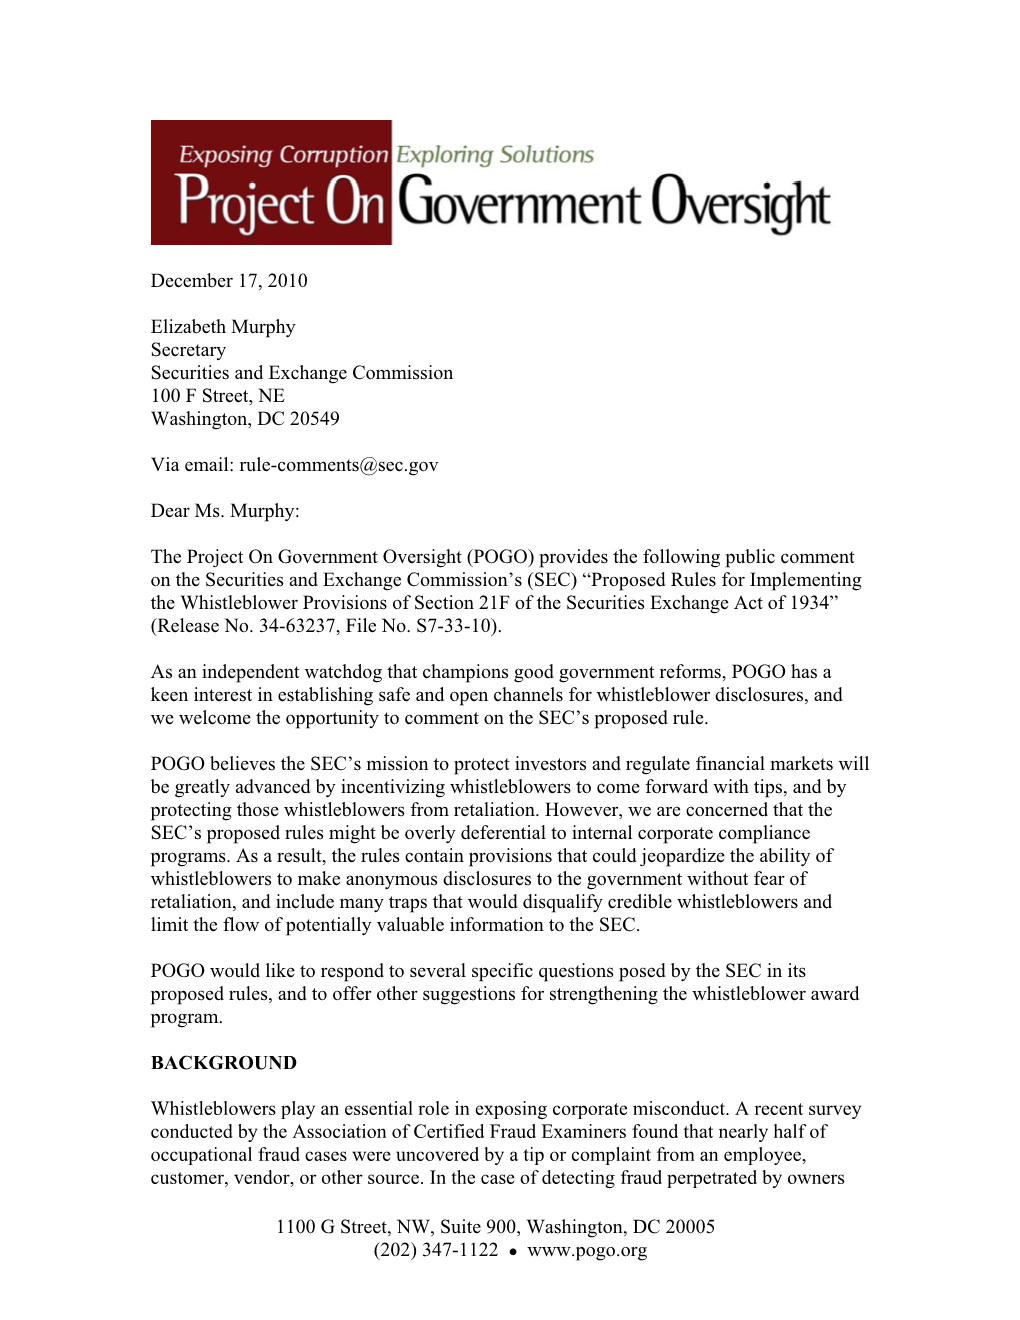 Outline for Public Comment on SEC Whistleblower Reward Program